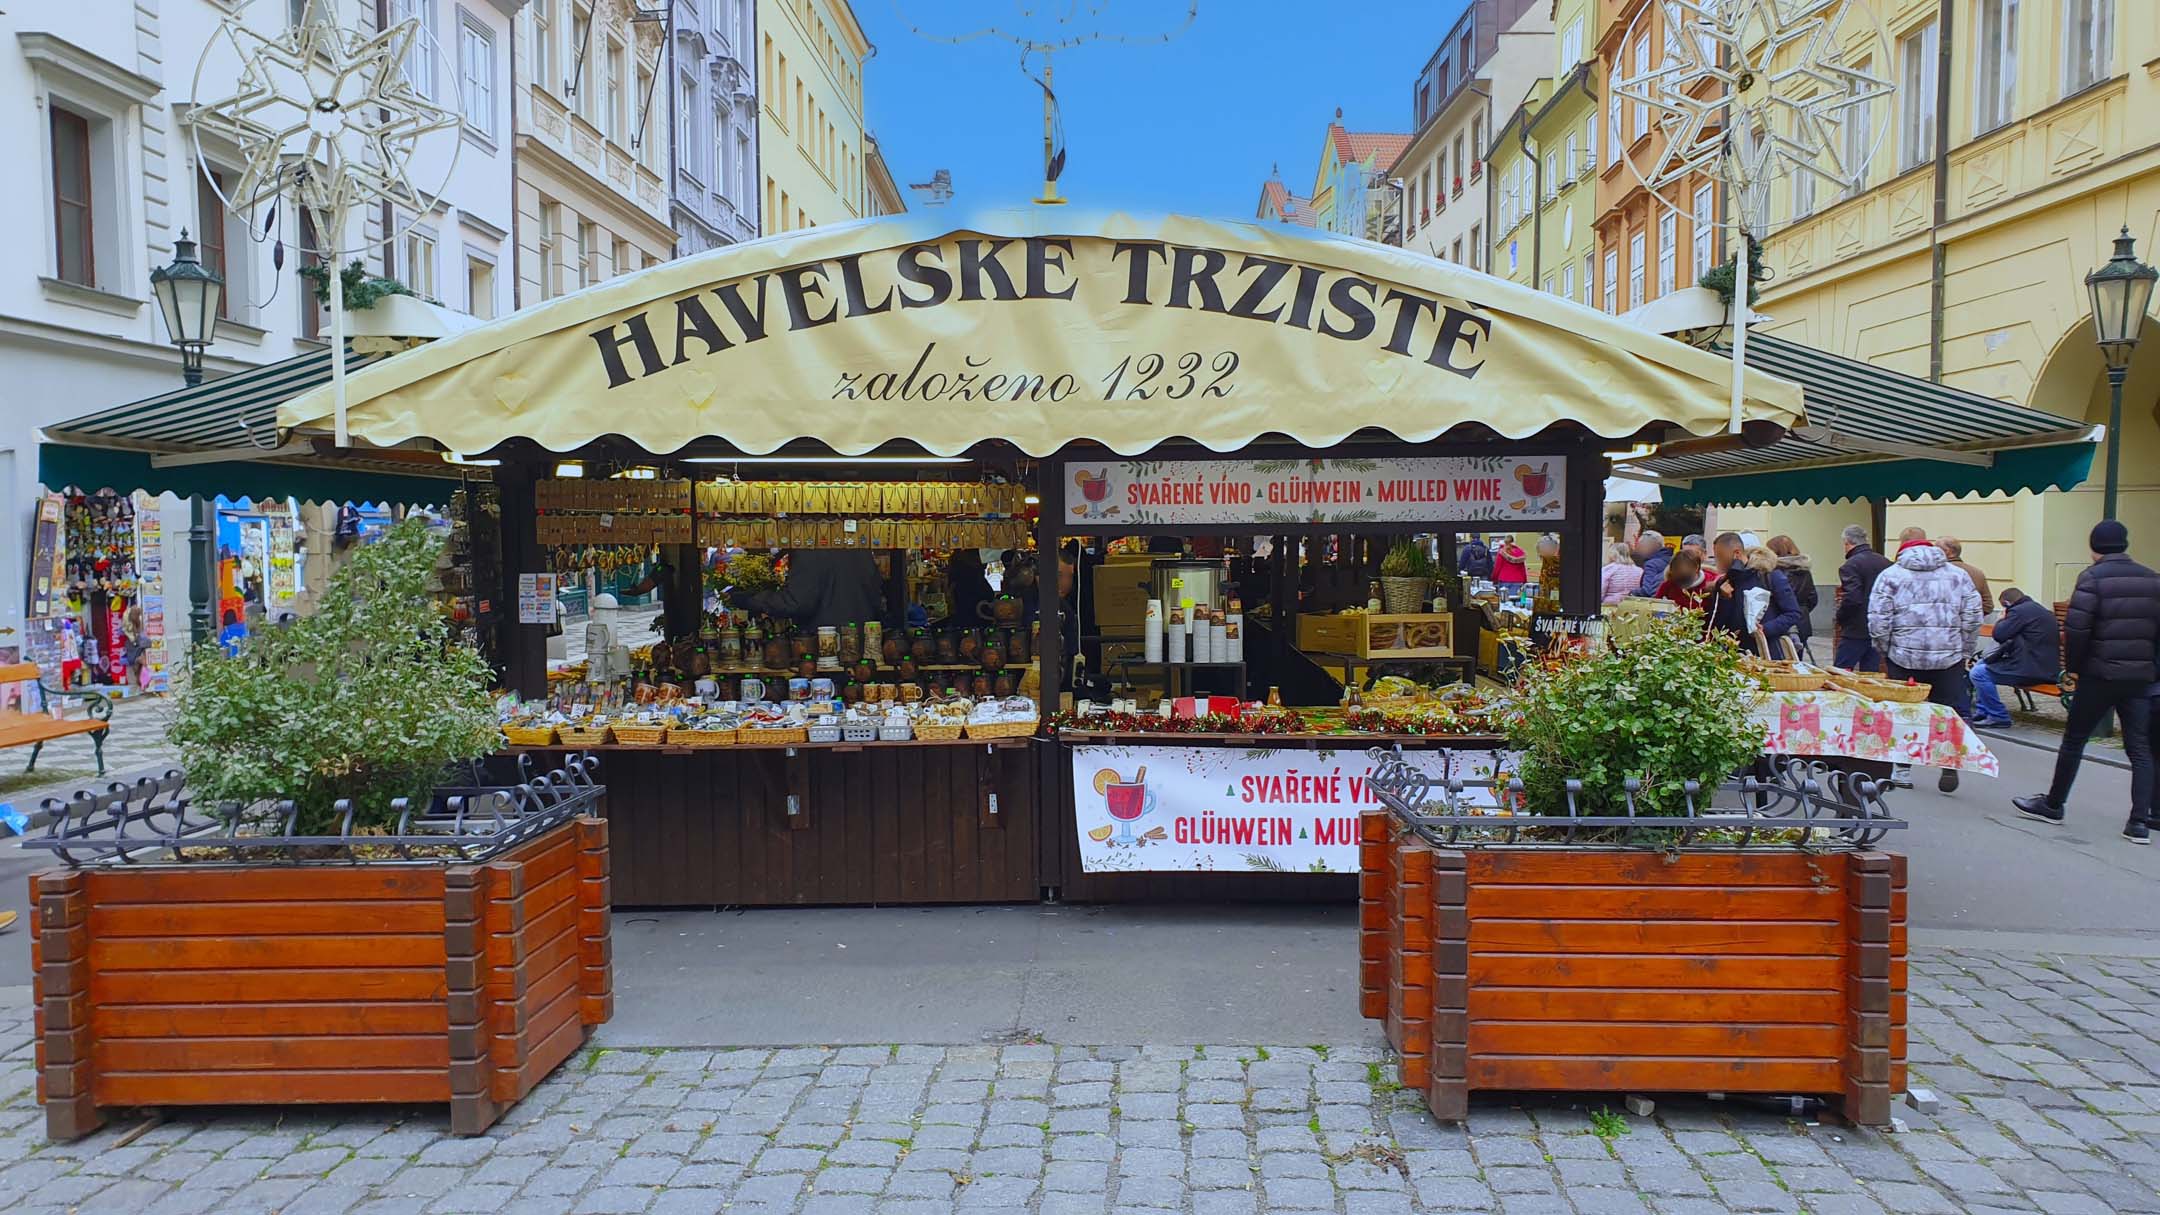 Place du marché de la Havel ( Havelské tržiště )